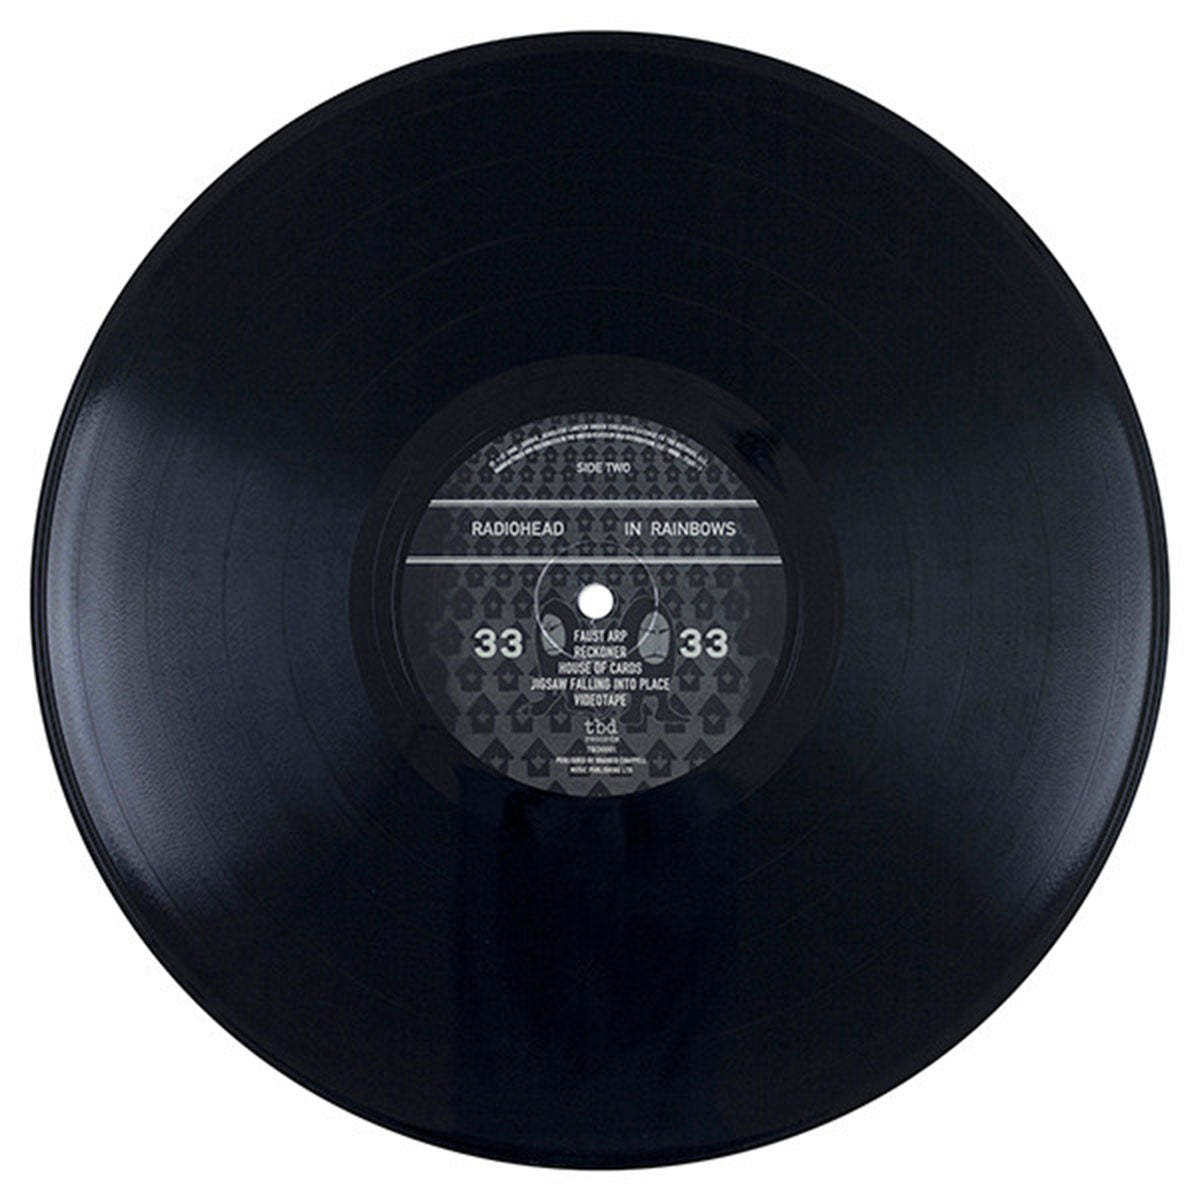 Radiohead – In Rainbows - US Pressing - Misprint – Vinyl Pursuit Inc